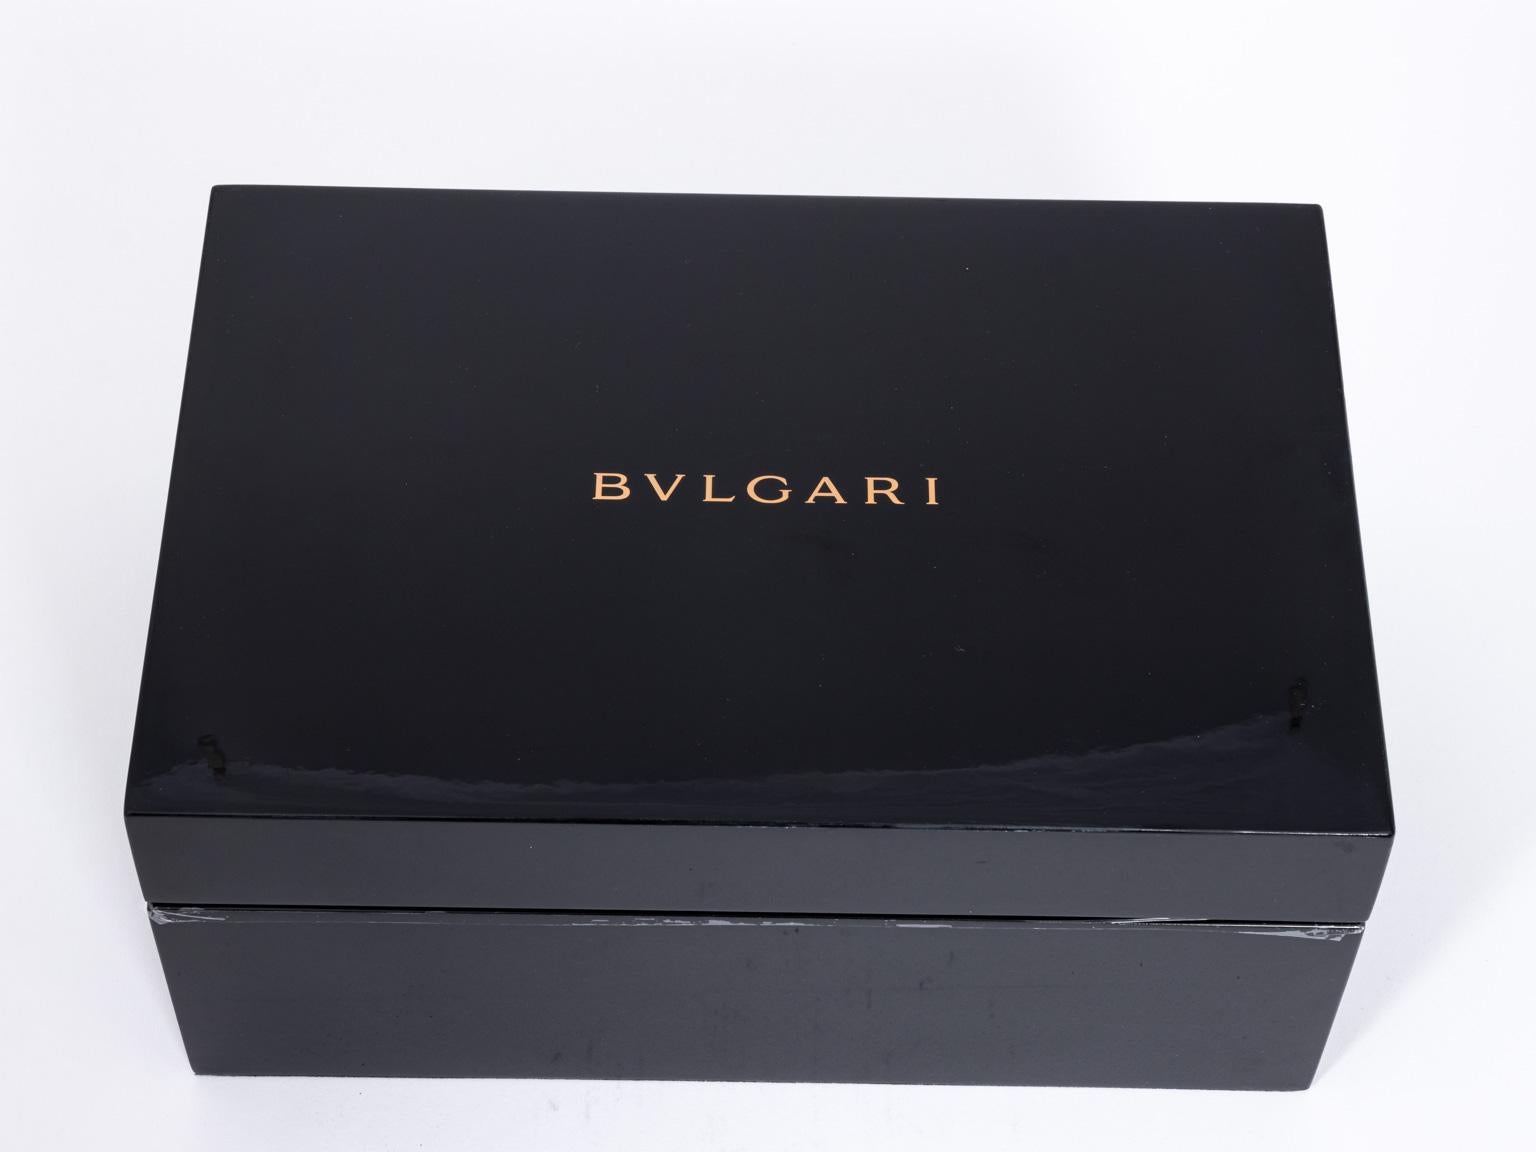 Bulgari Lacquer Large Presentation Box 4